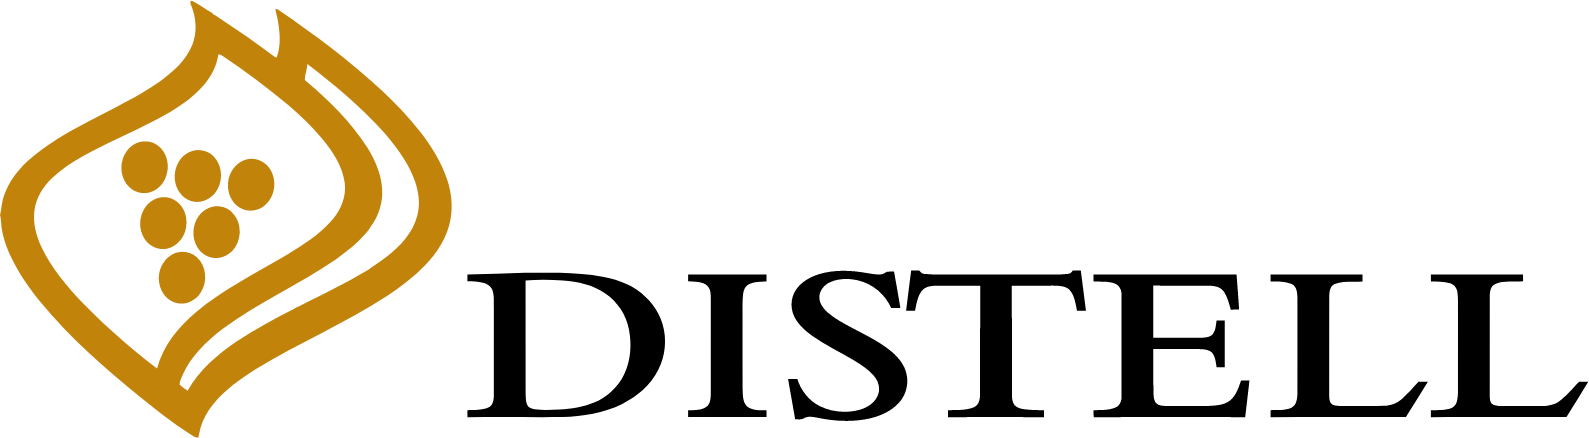 Distell Group logo large (transparent PNG)